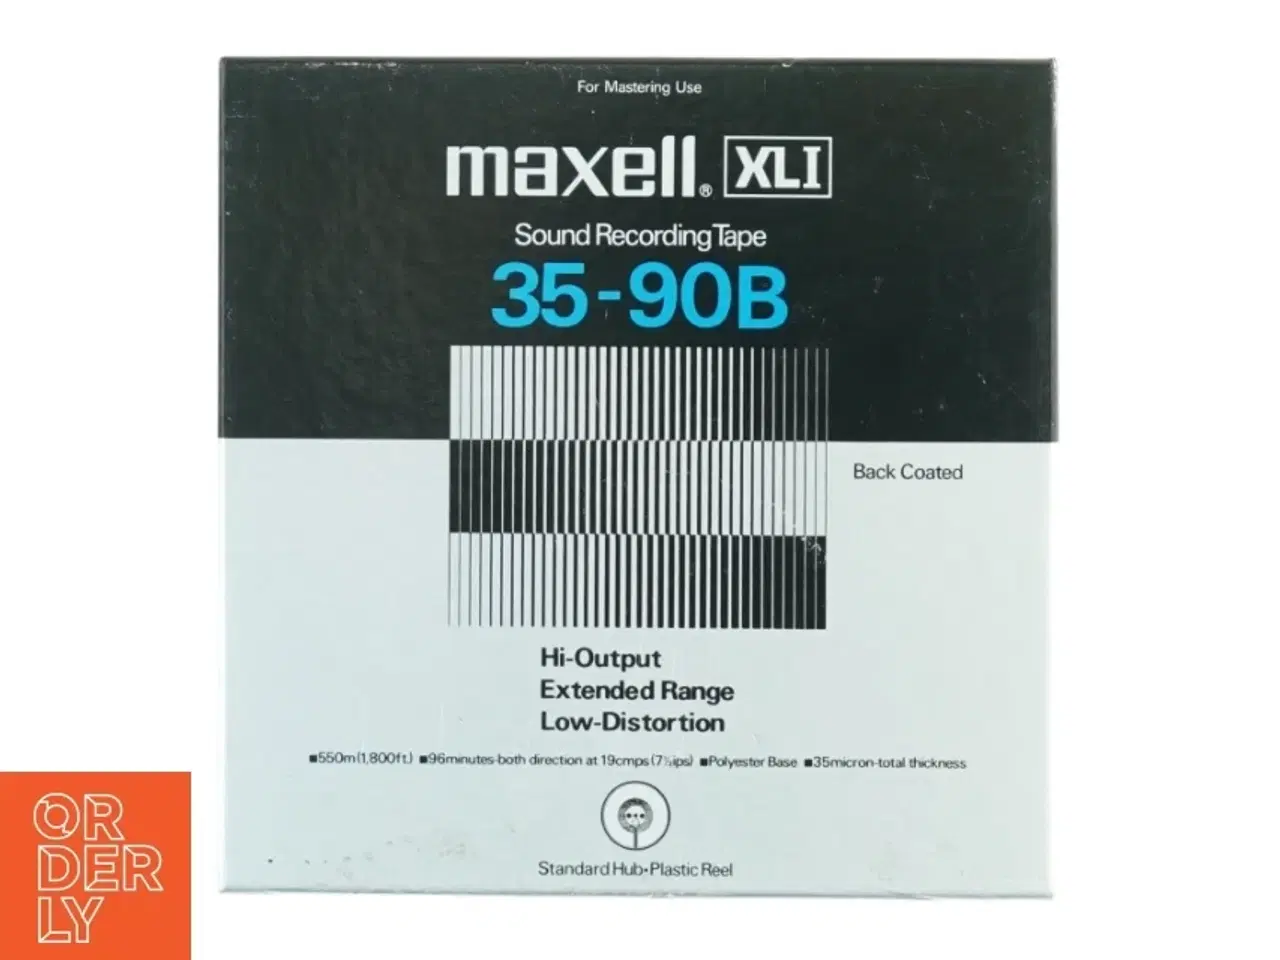 Billede 1 - Maxell XL II 35-90B Audio Tape fra Maxell (str. 18 x 18 cm)